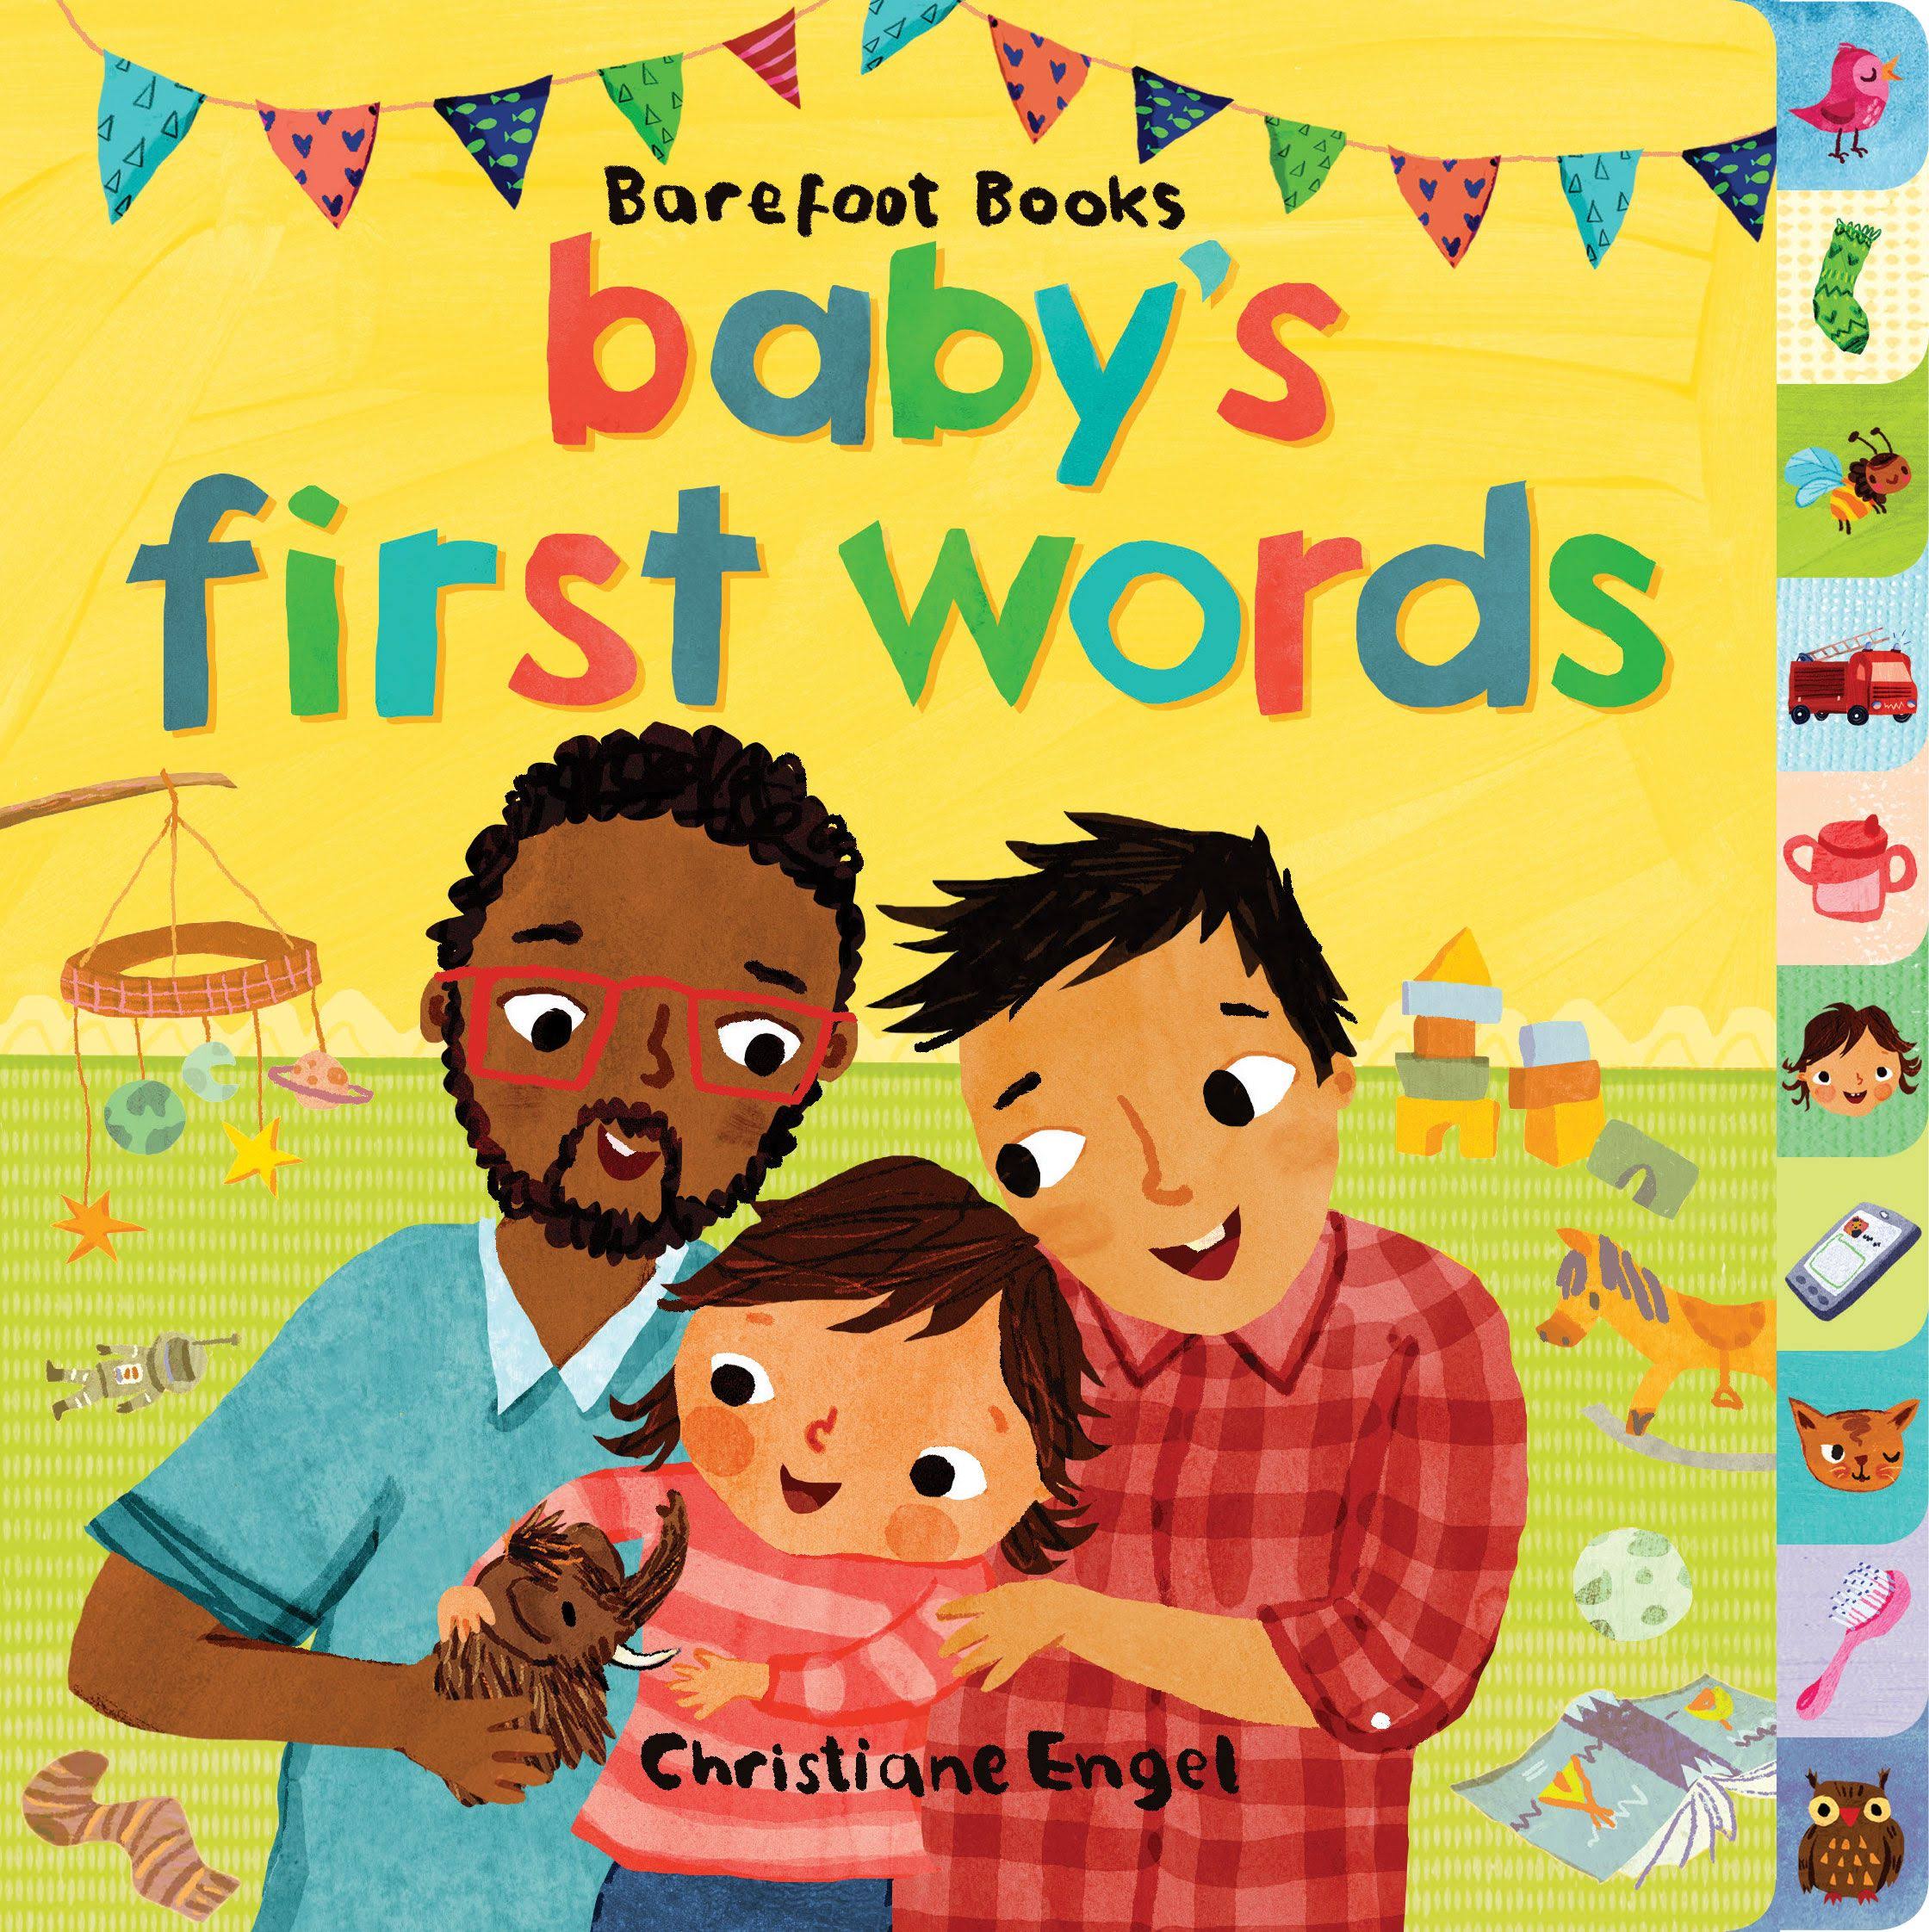 Baby's First Words by Stella Blackstone